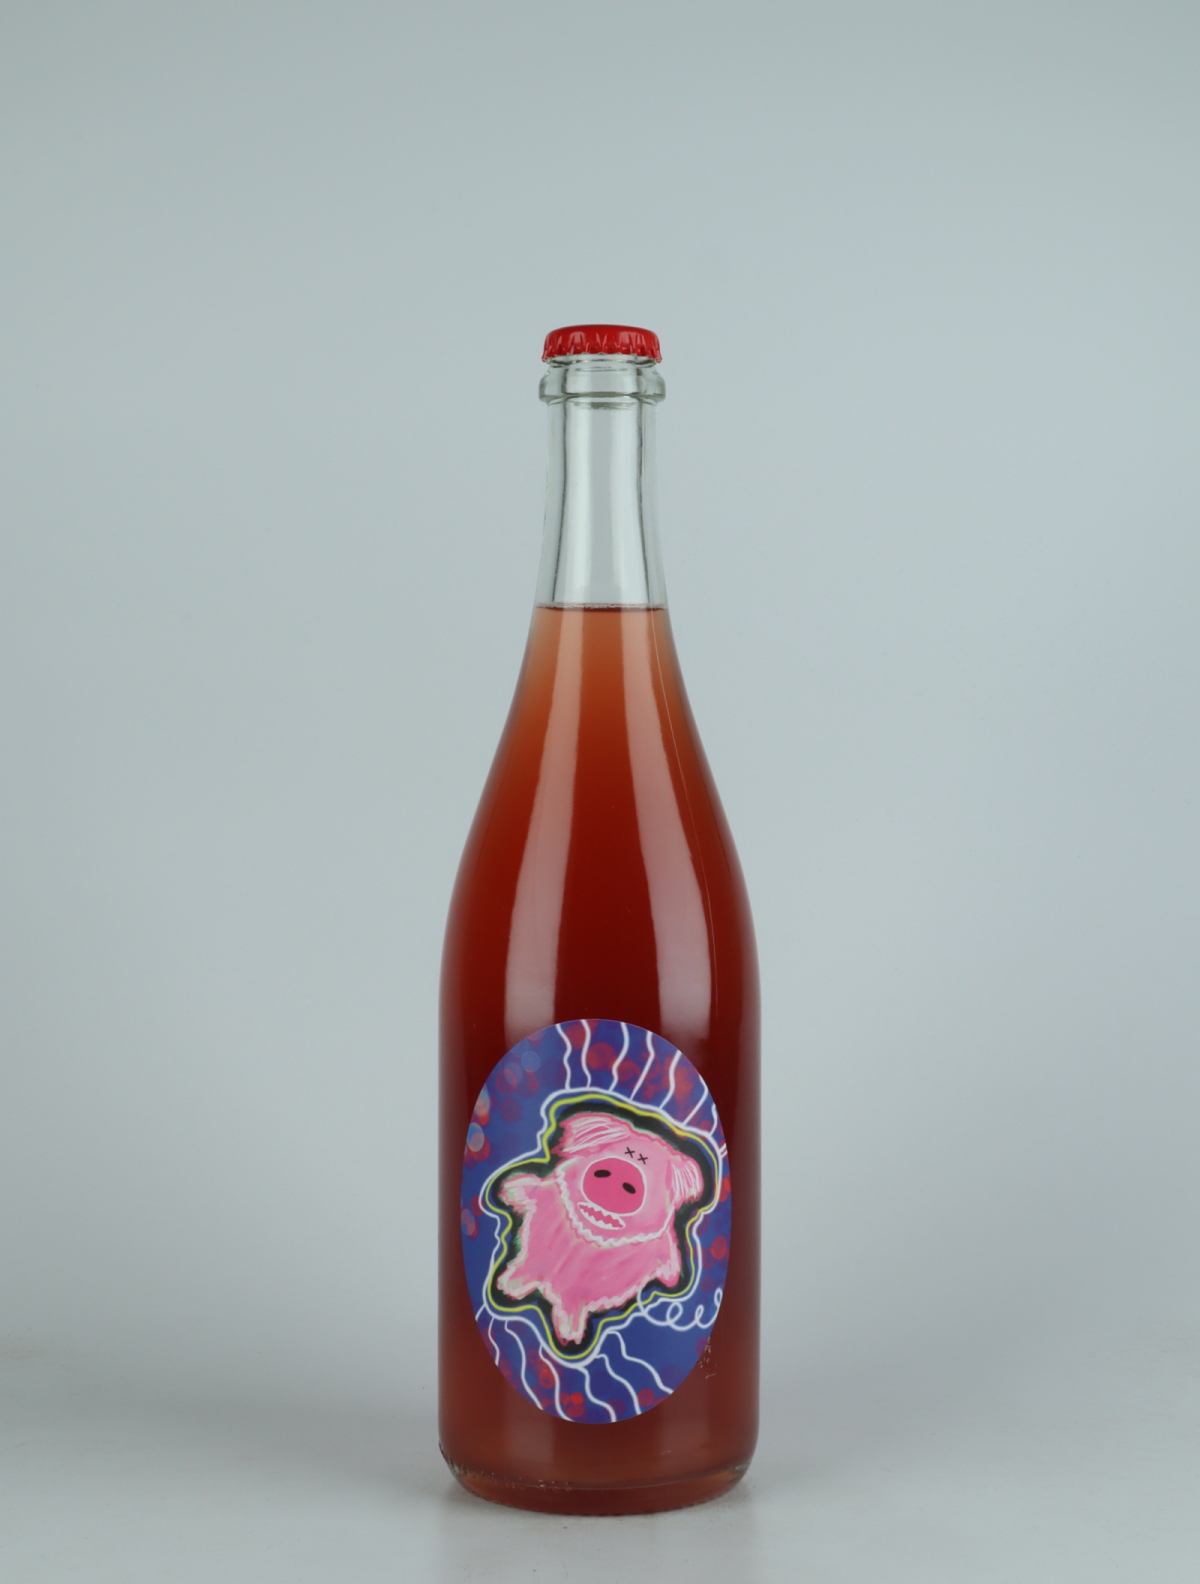 A bottle 2021 Piggy Pop Sparkling from Wildman, Adelaide Hills in Australia